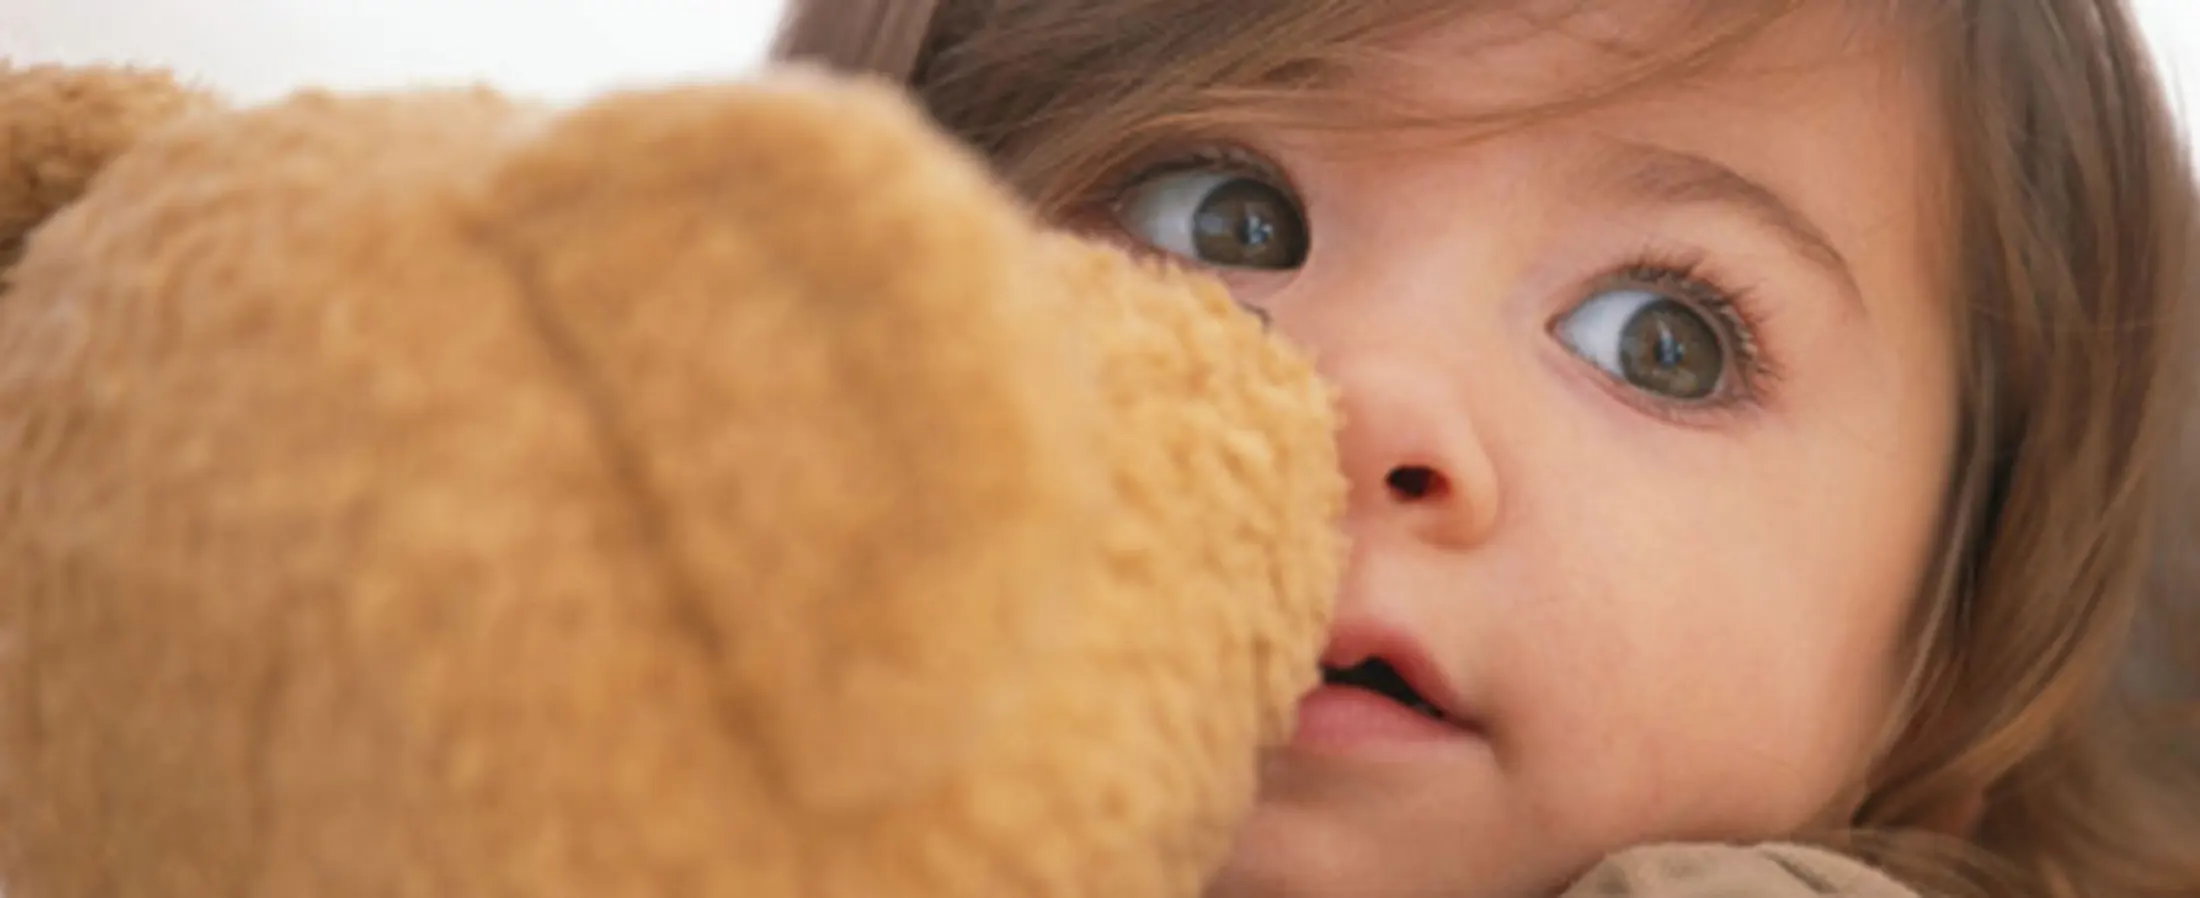 Little girl with her teddy bear